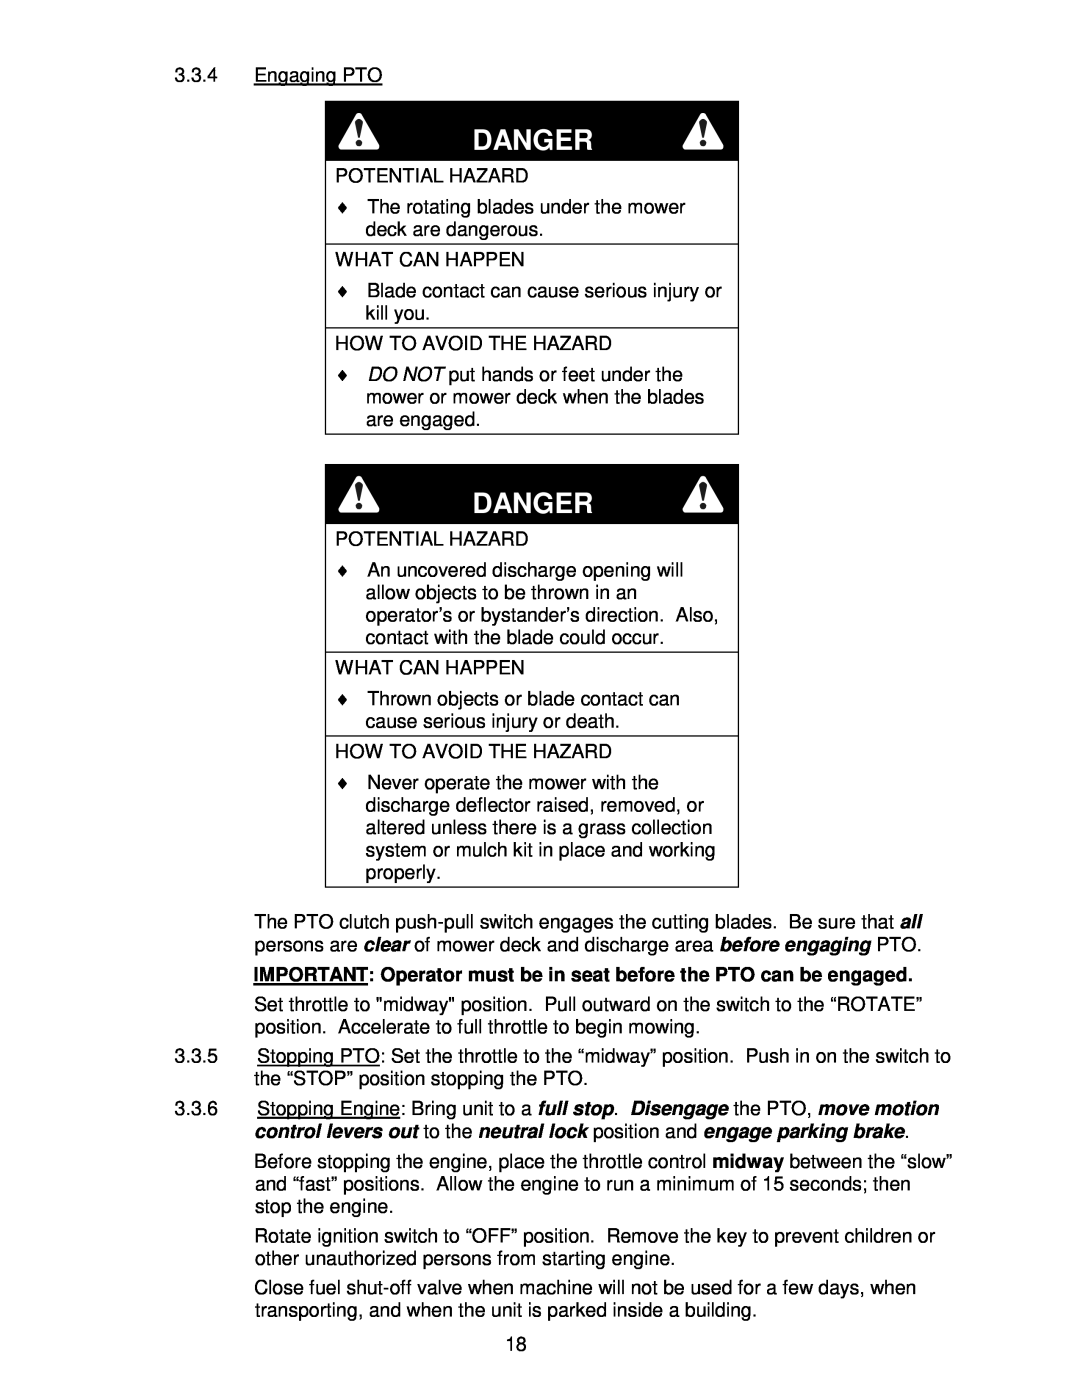 Exmark Lazer Z CT manual Danger, 3.3.4Engaging PTO 